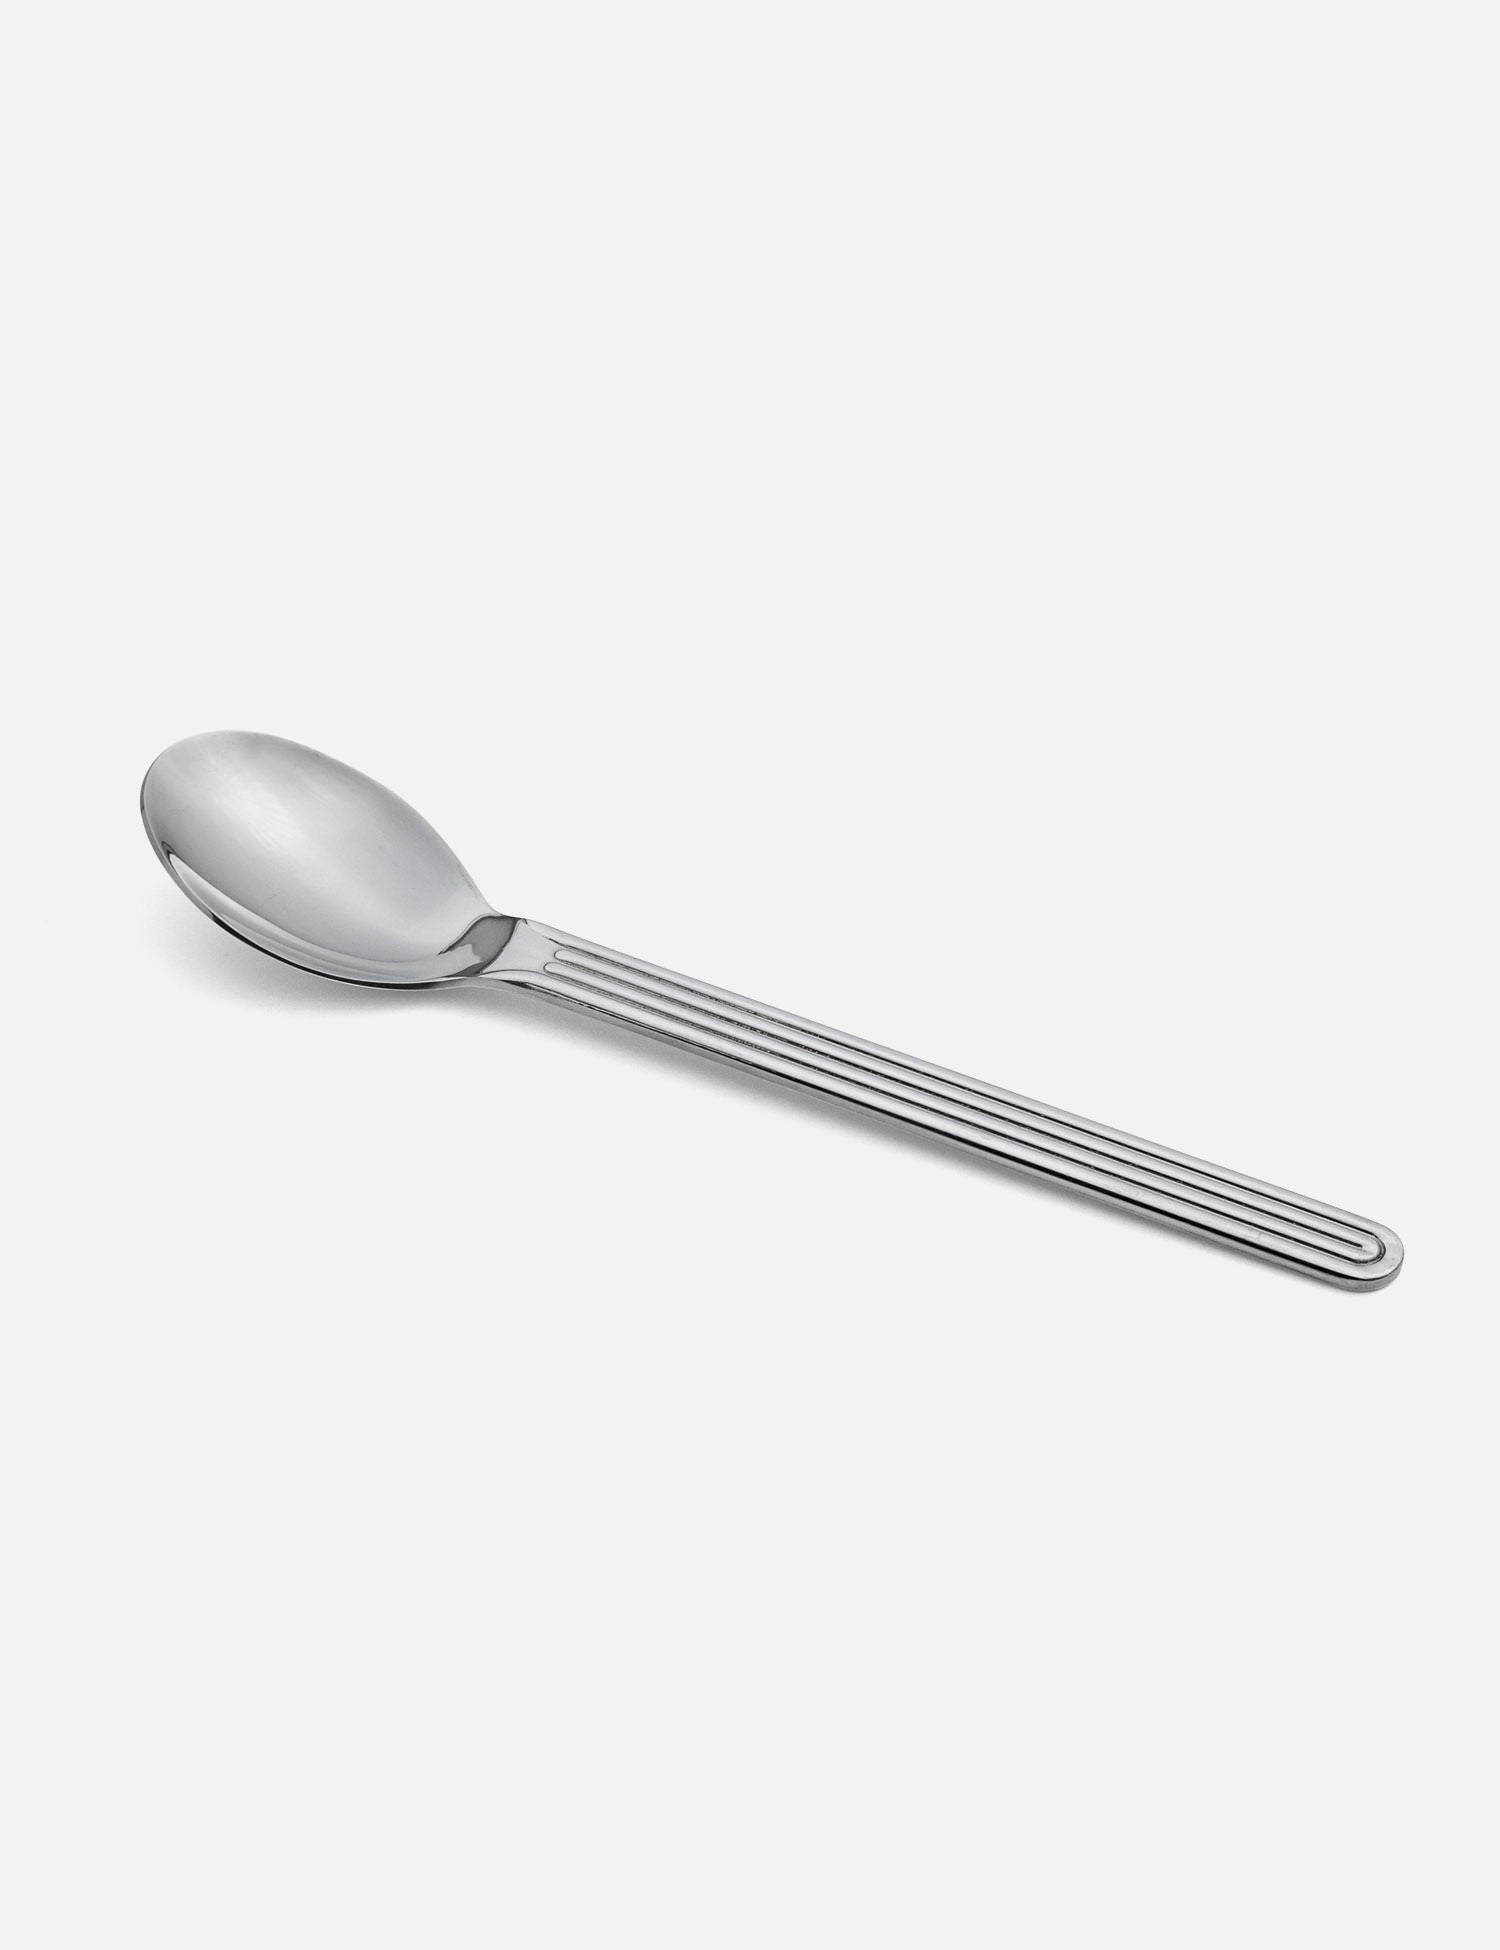 Sunday Spoon (5 Piece Set)